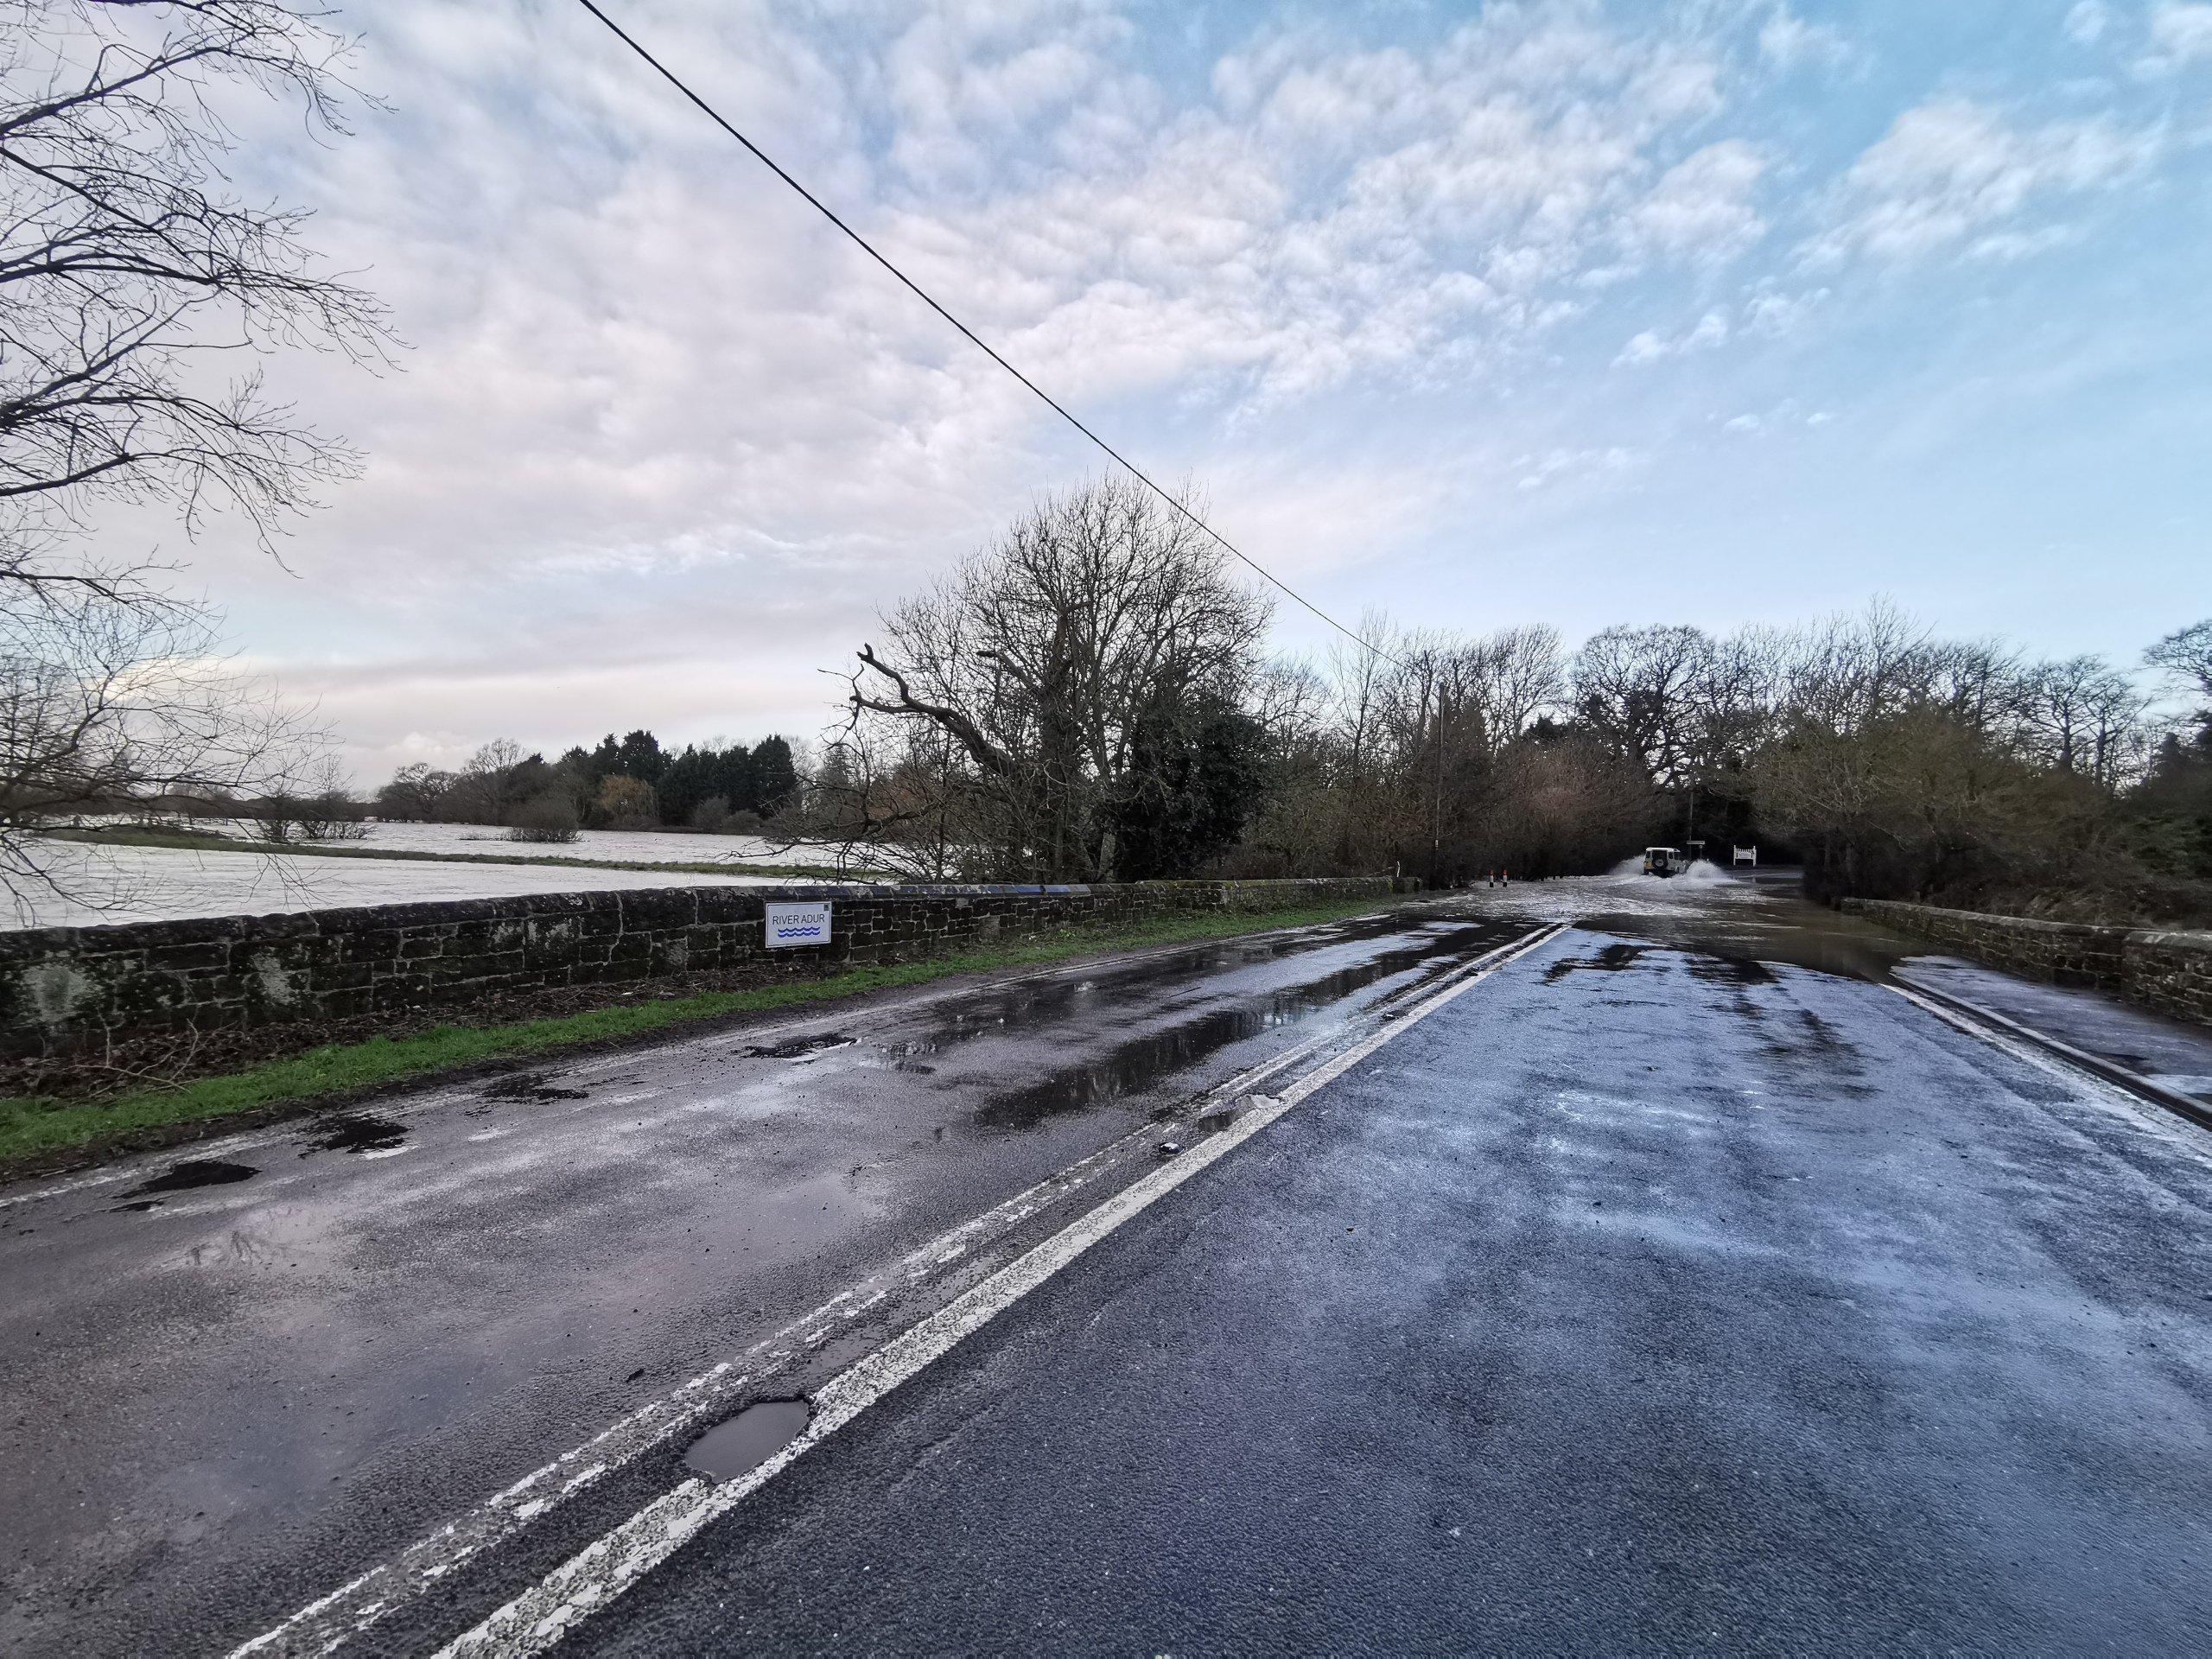 Flooding in Shermanbury. Photo by Adrian Woolley